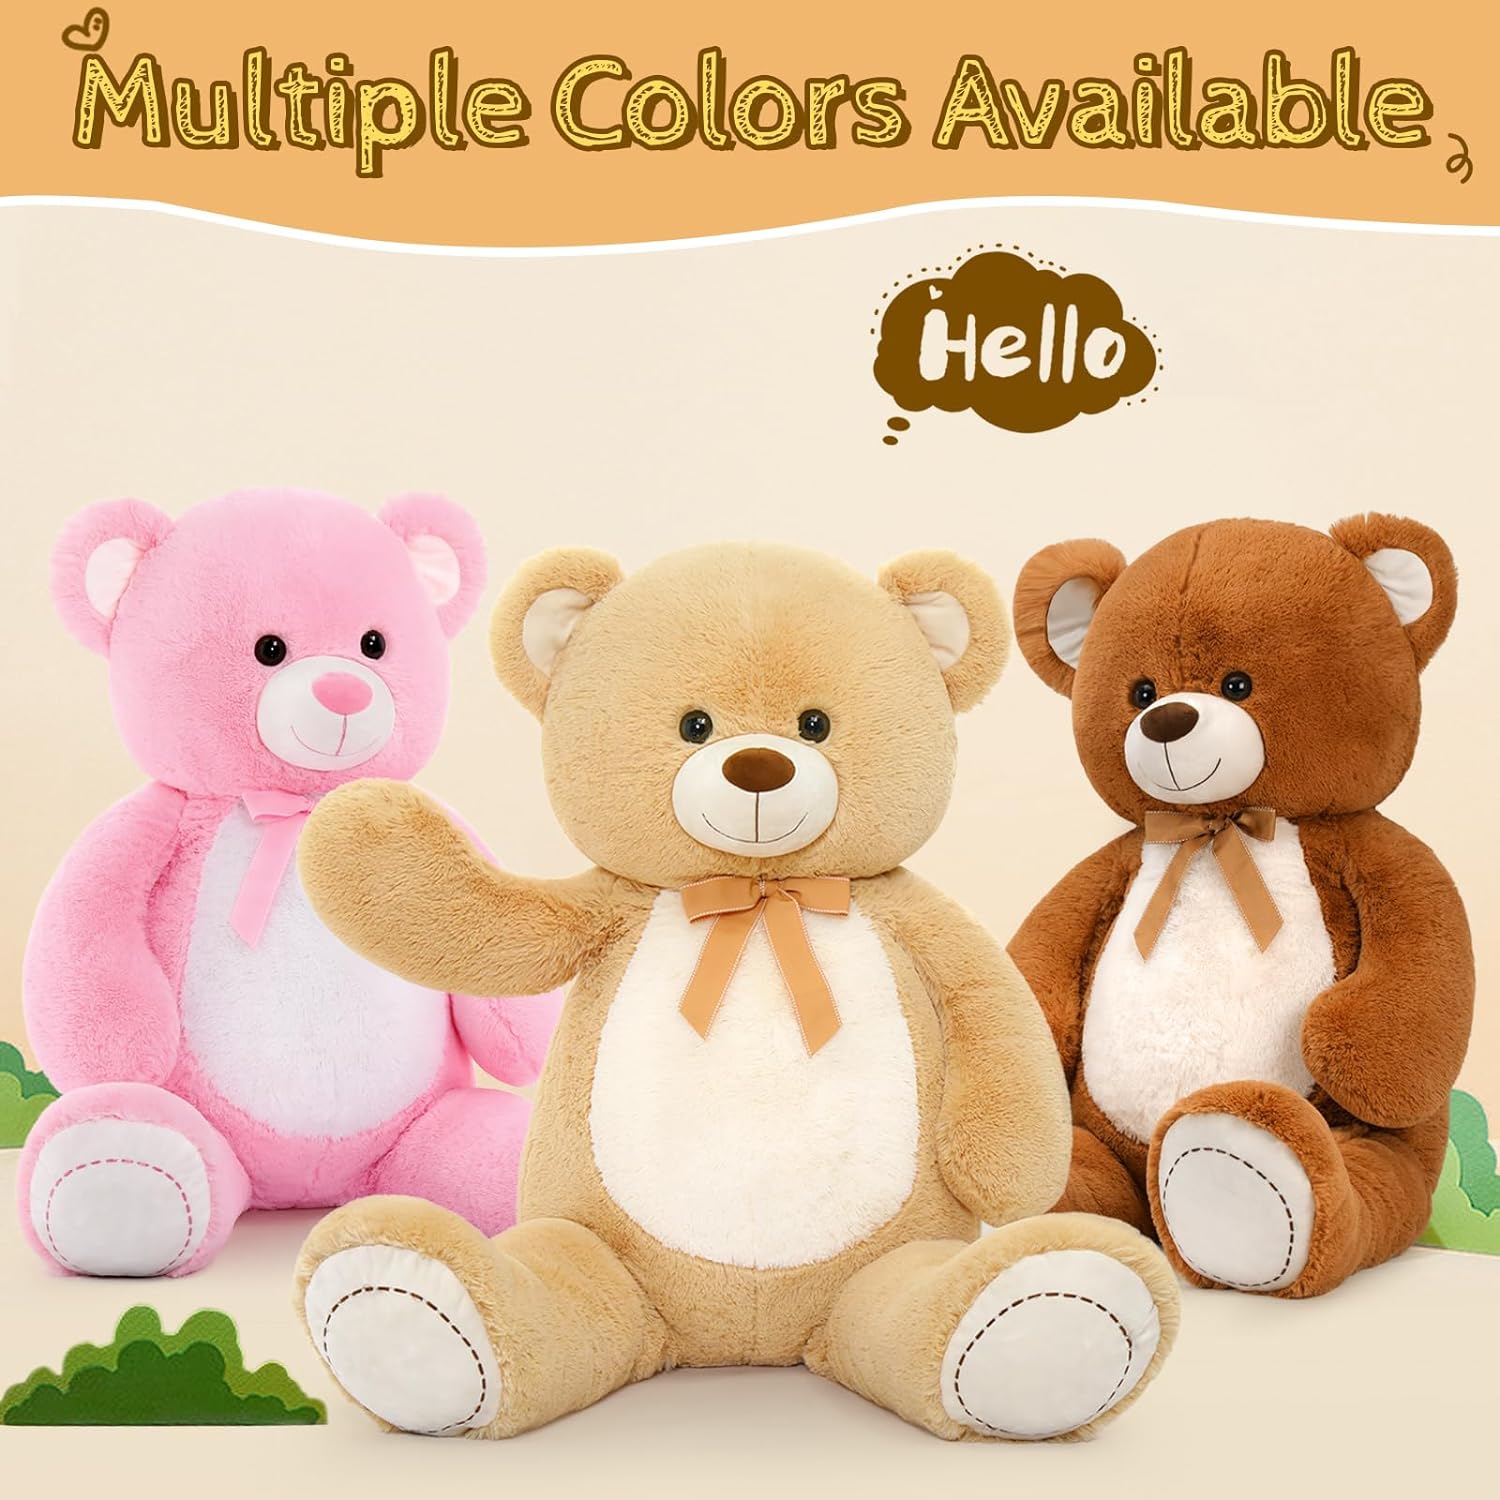 Big Teddy Bear Plush Toy, Light Brown/Dark Brown/Pink, 51 Inches